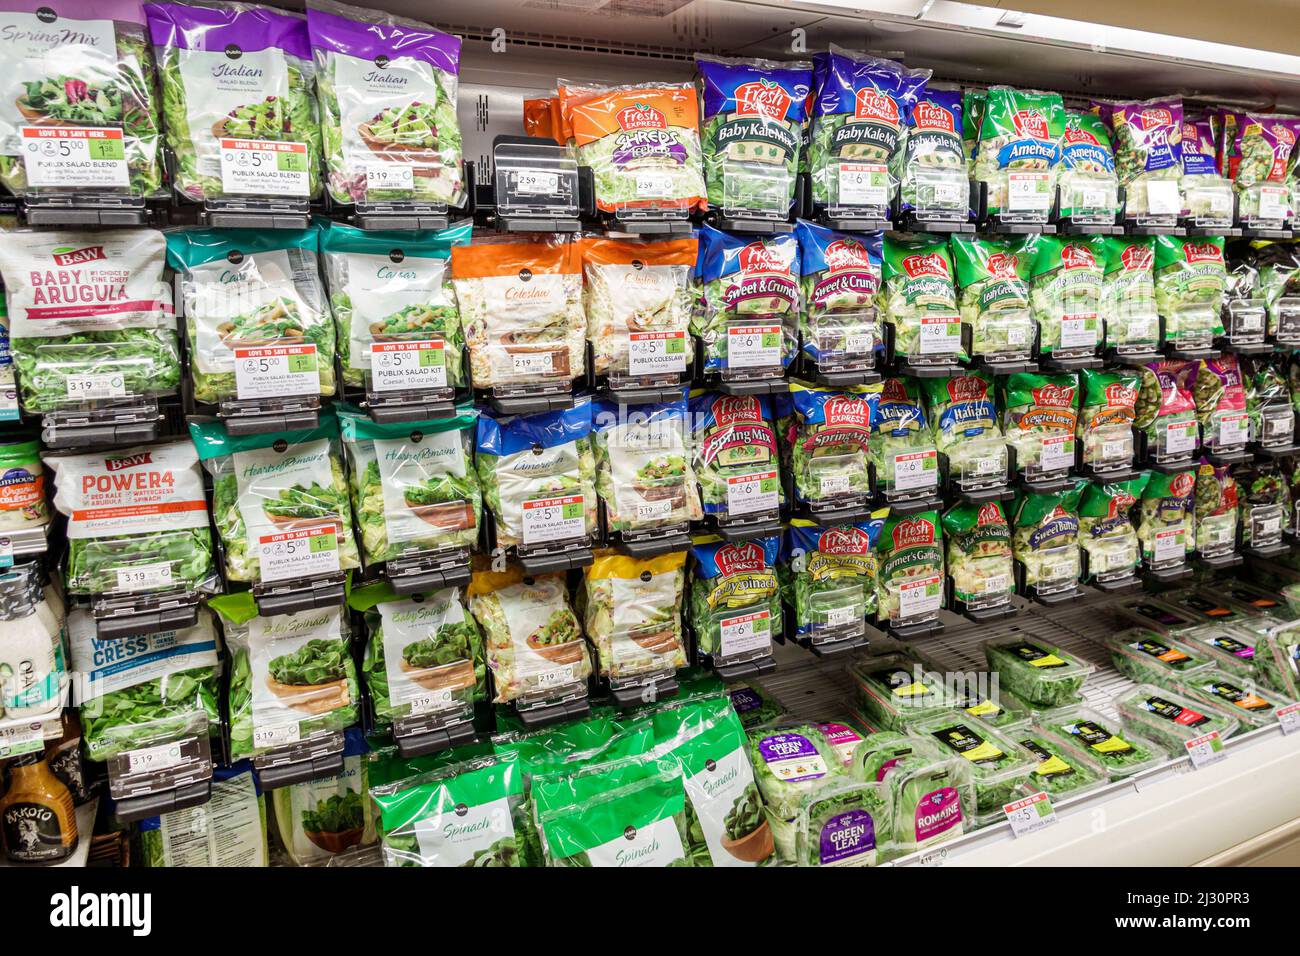 Miami Beach Florida, Publix, supermercado, comida, interior, venta de muestra, bolsas ensalada envasada Fresh Express Foto de stock